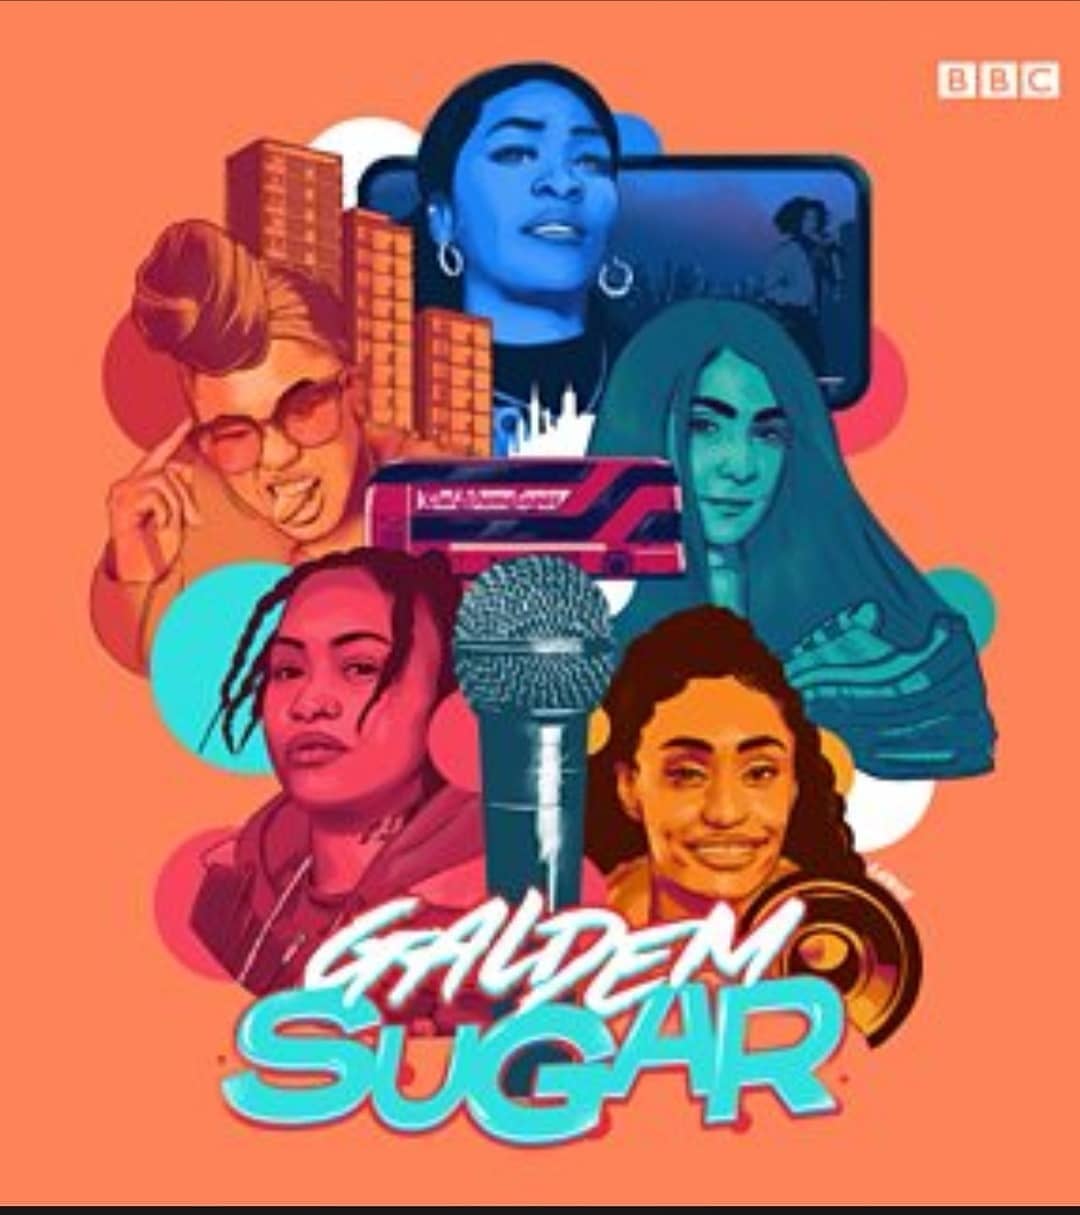 Galdem Sugar EP4 – Keeping Up Appearances